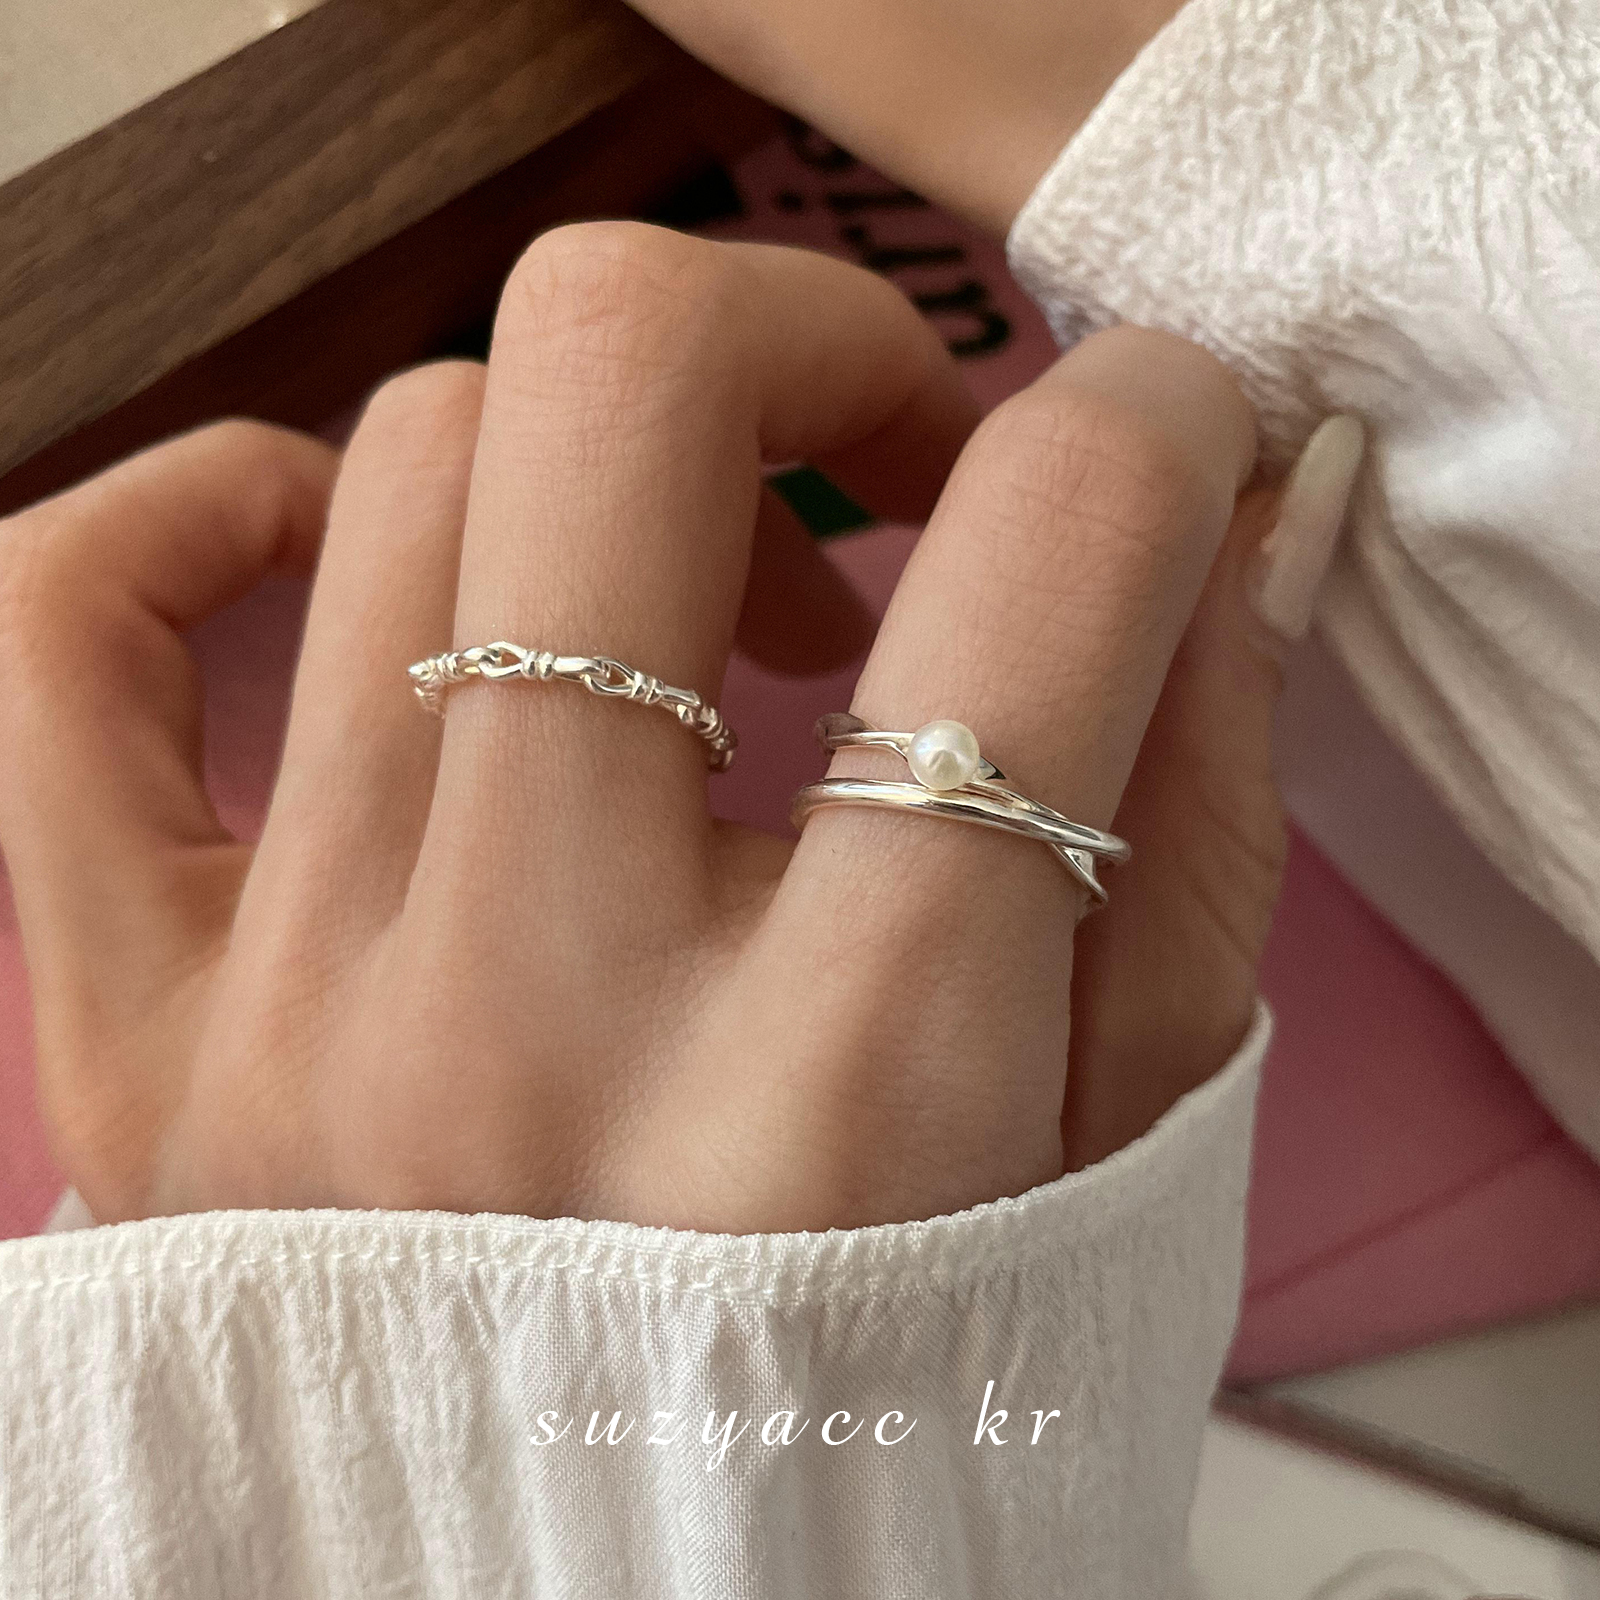 suzyacc kr小众设计高级感珍珠纯银细戒指时尚个性食指戒可调节